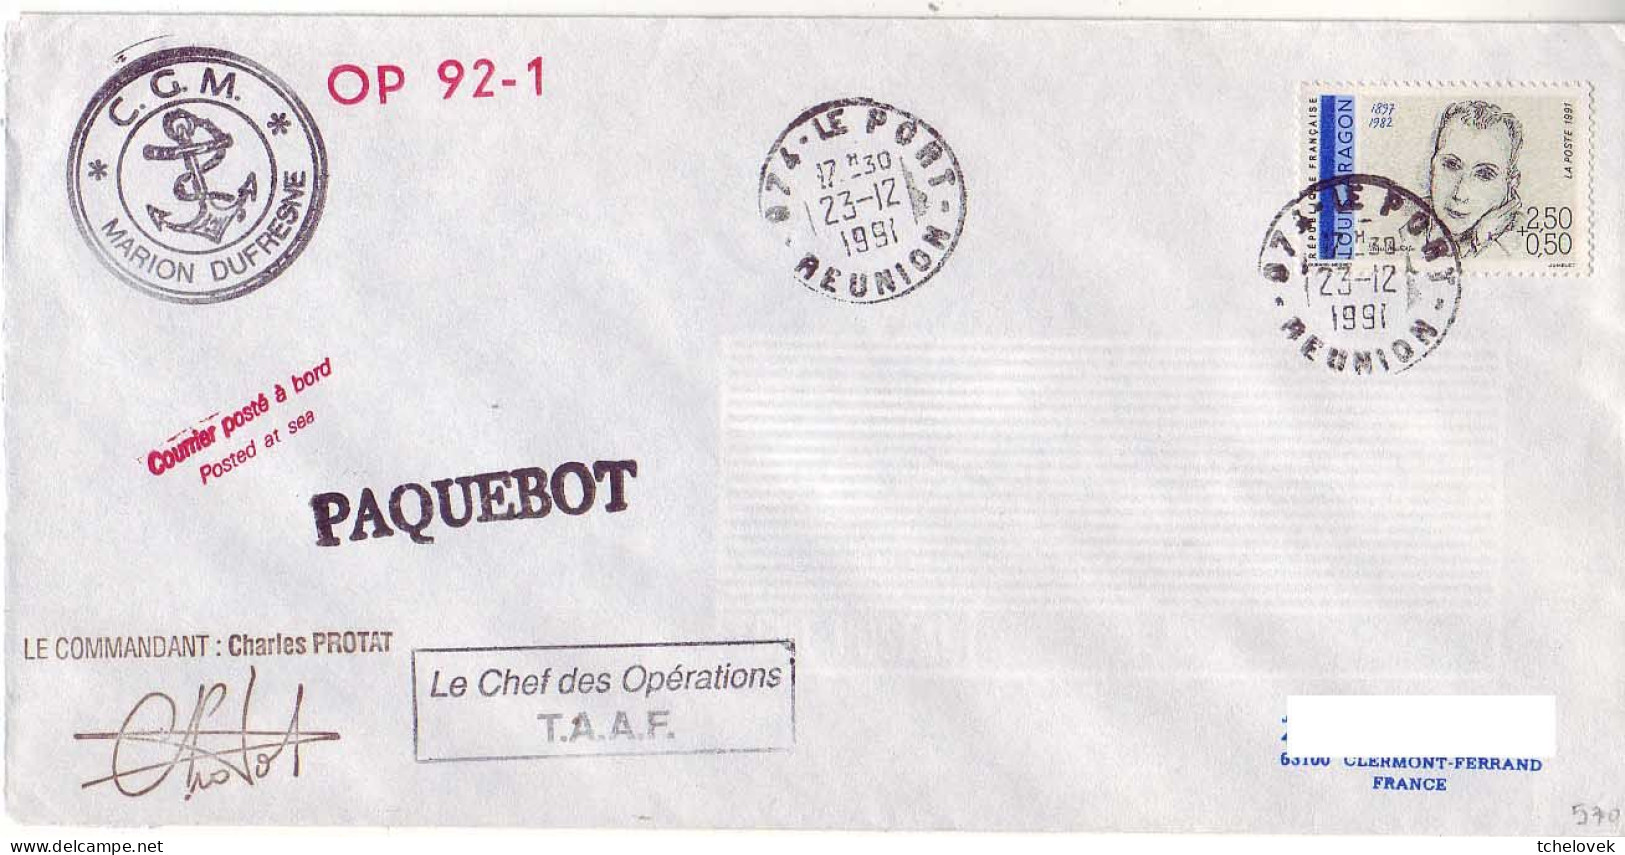 FSAT TAAF Marion Dufresne. 23.12.91 Le Port Reunion Op 92.1 - Covers & Documents